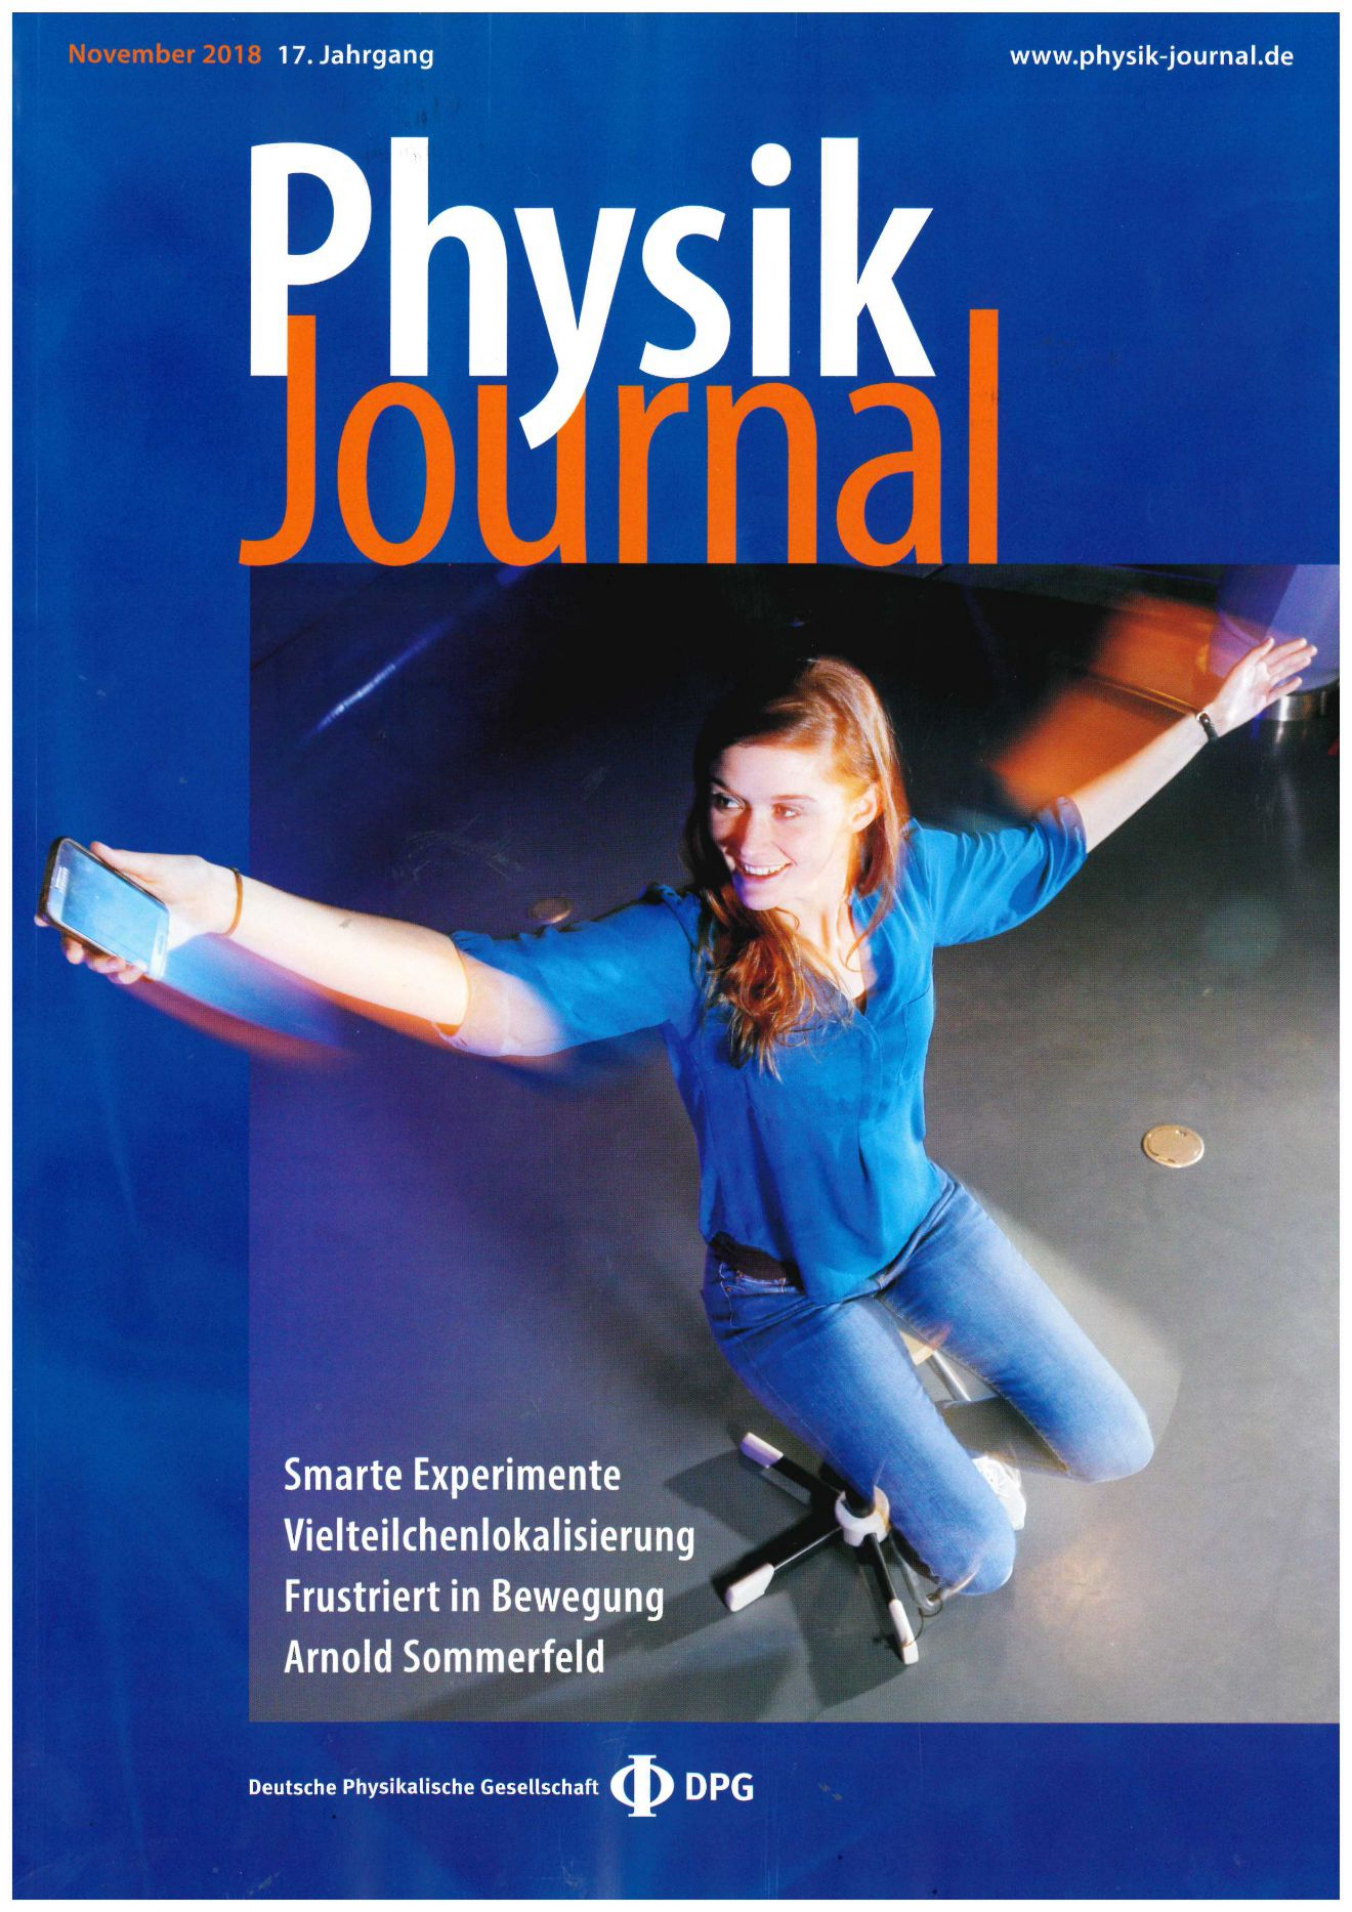 ../../images/news/Physik_Journal_Cover.jpg